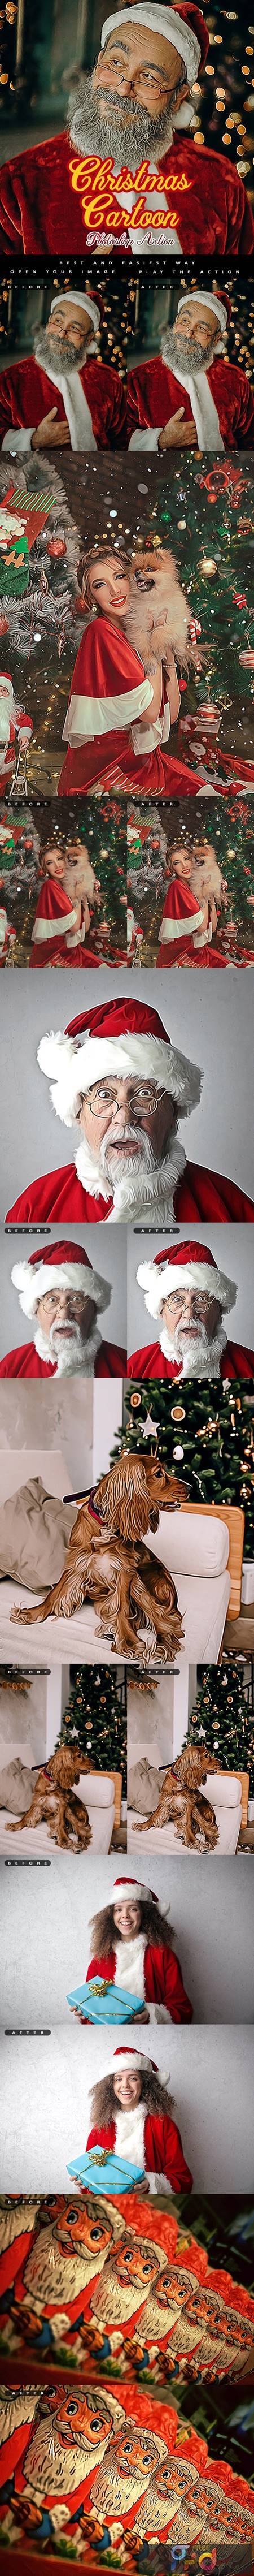 Christmas Cartoon   Photoshop Action